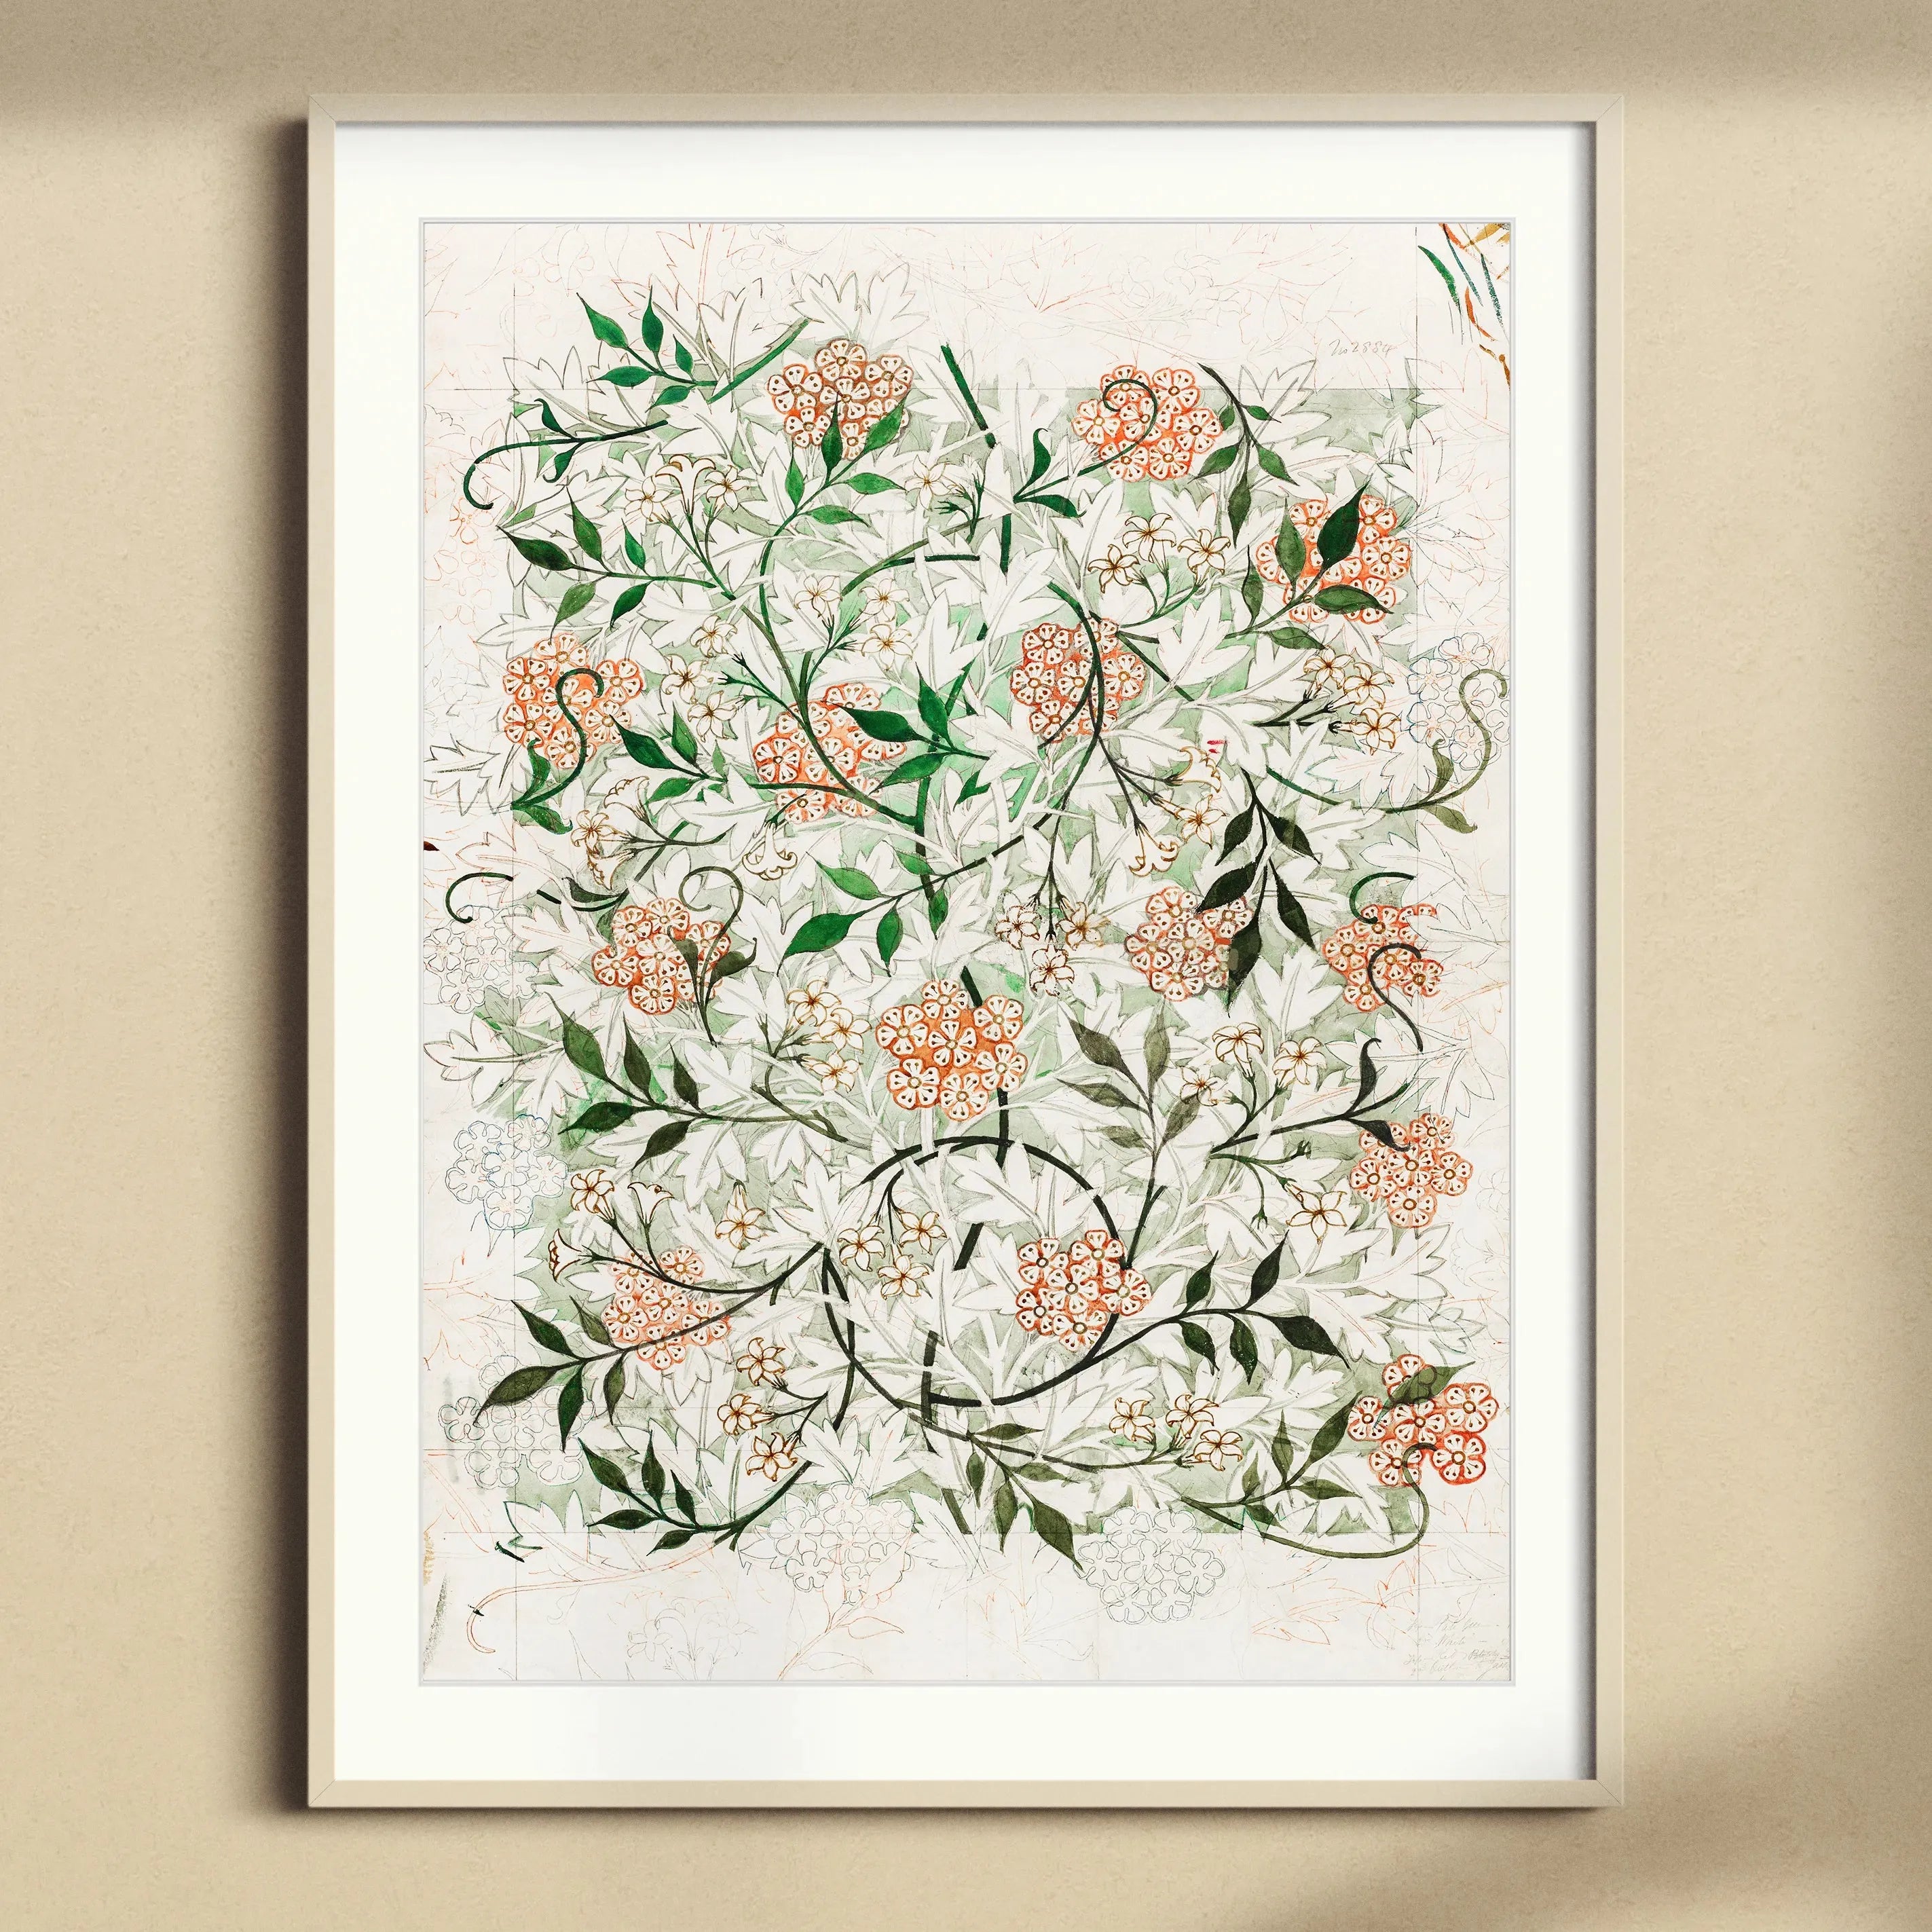 Jasmine By William Morris Framed & Mounted Print - Posters Prints & Visual Artwork - Aesthetic Art